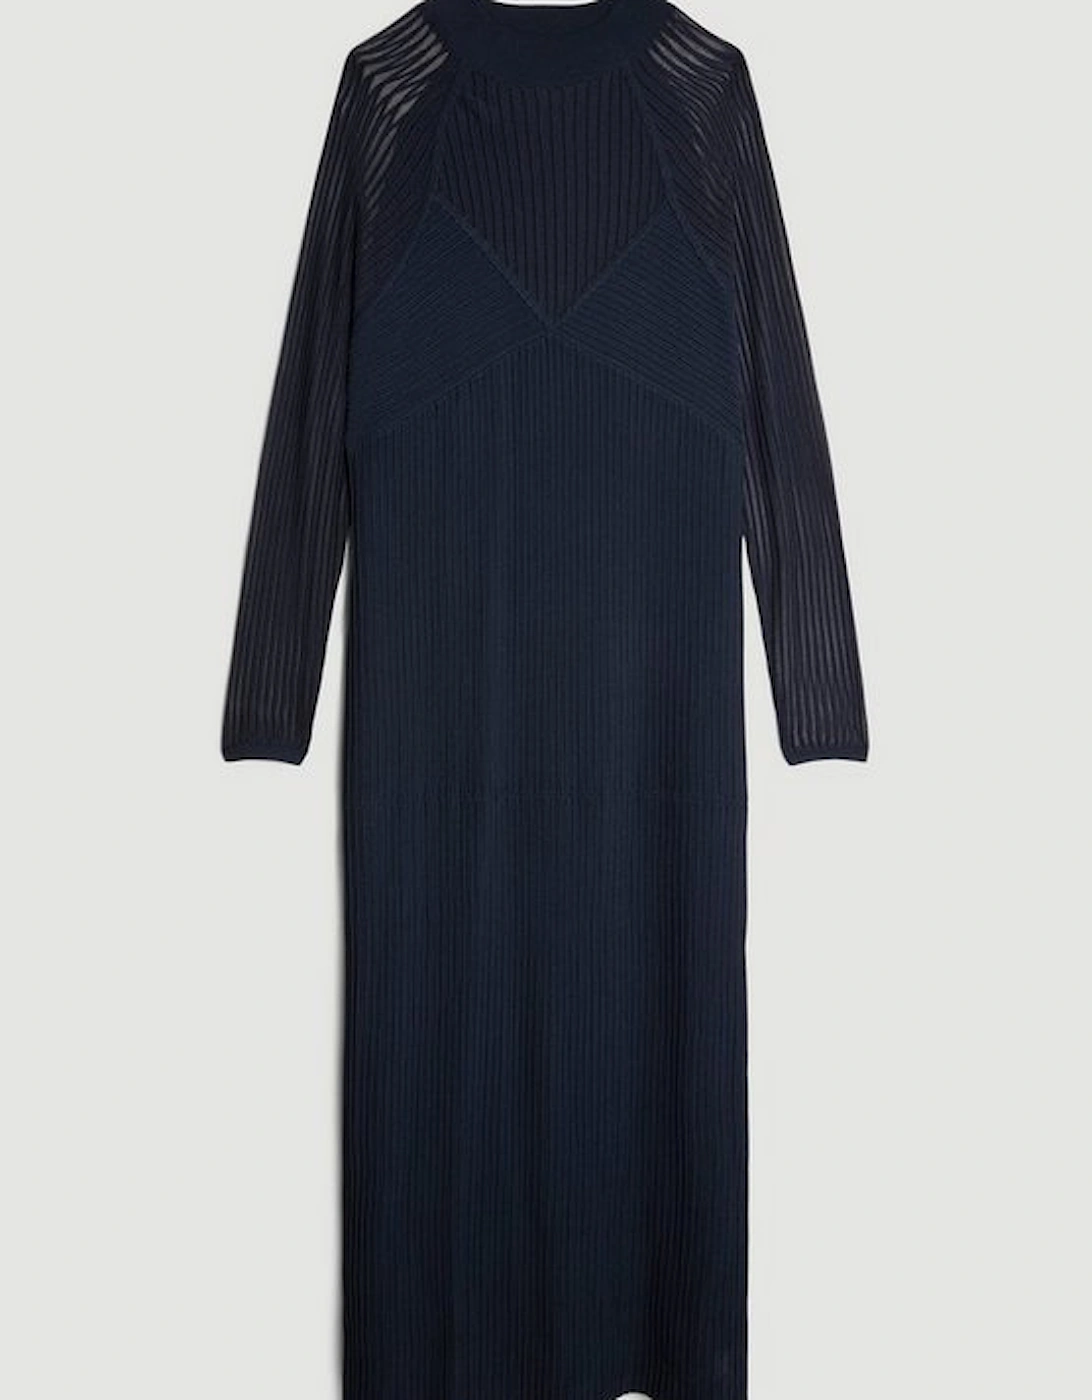 Plus Size Viscose Sheer Knit Column Midaxi Dress